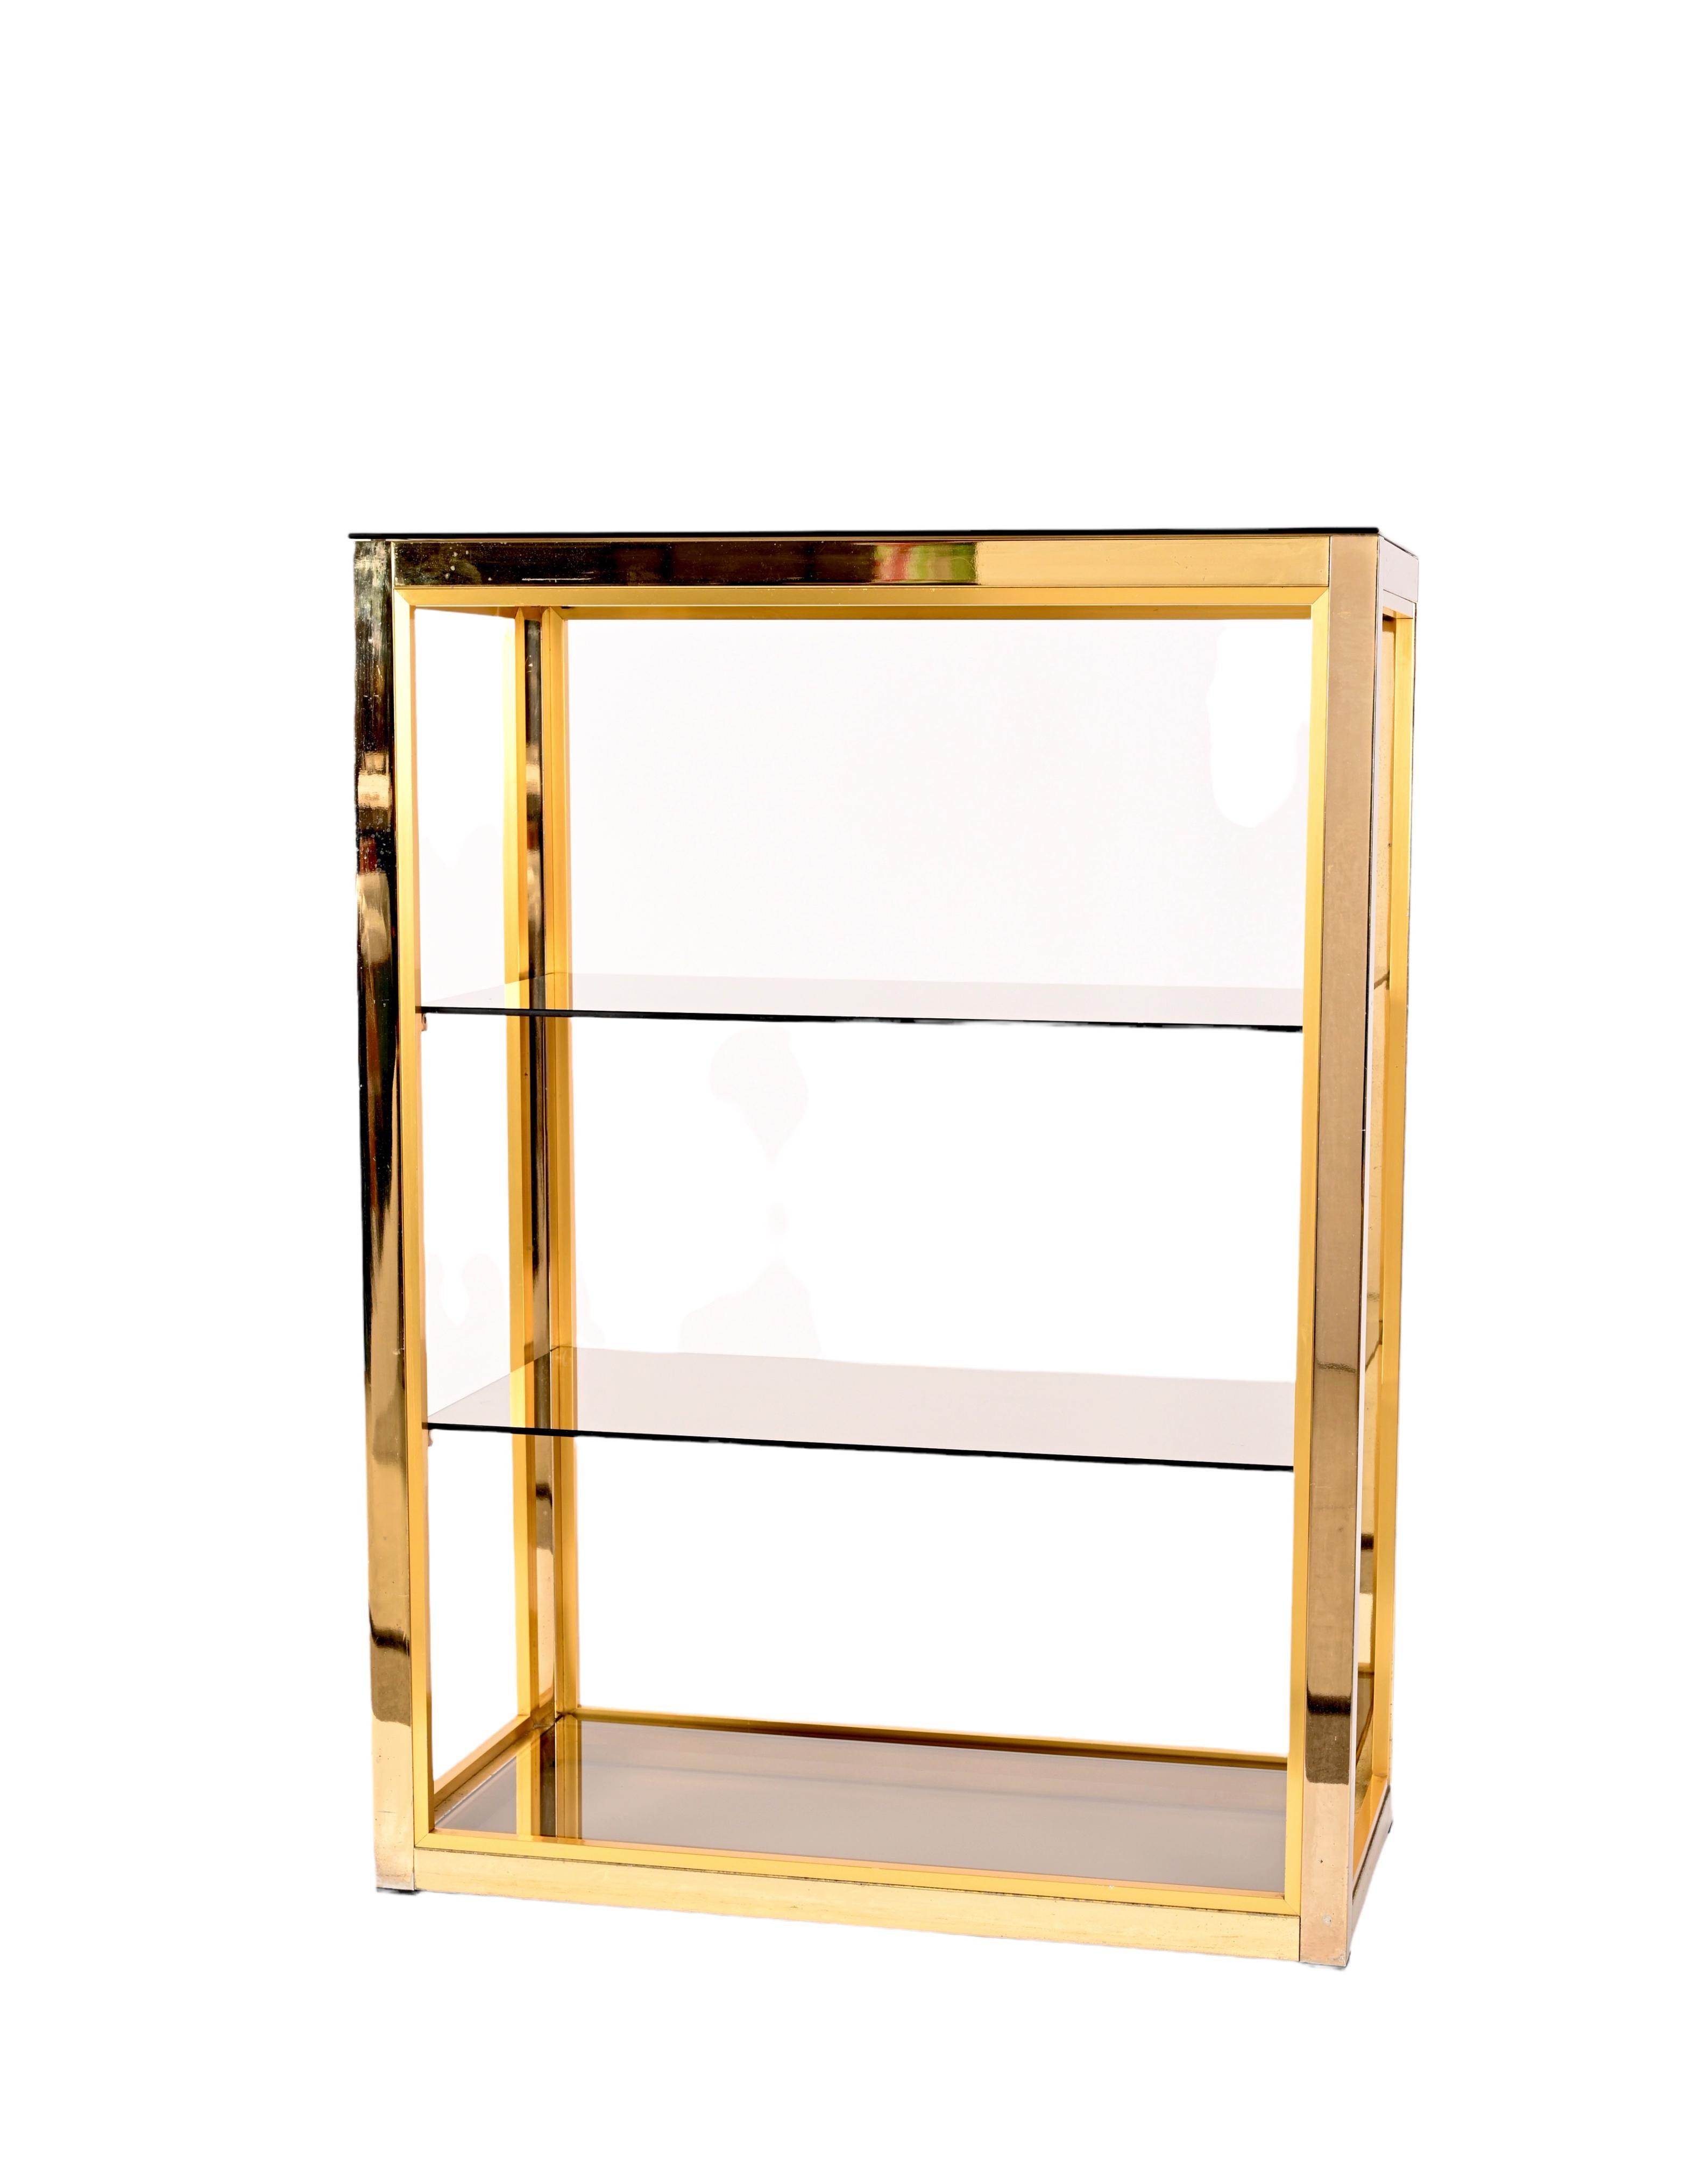 Renato Zevi Gilded Brass Italian Bookcase with Glass Shelves, Romeo Rega 1970s For Sale 5